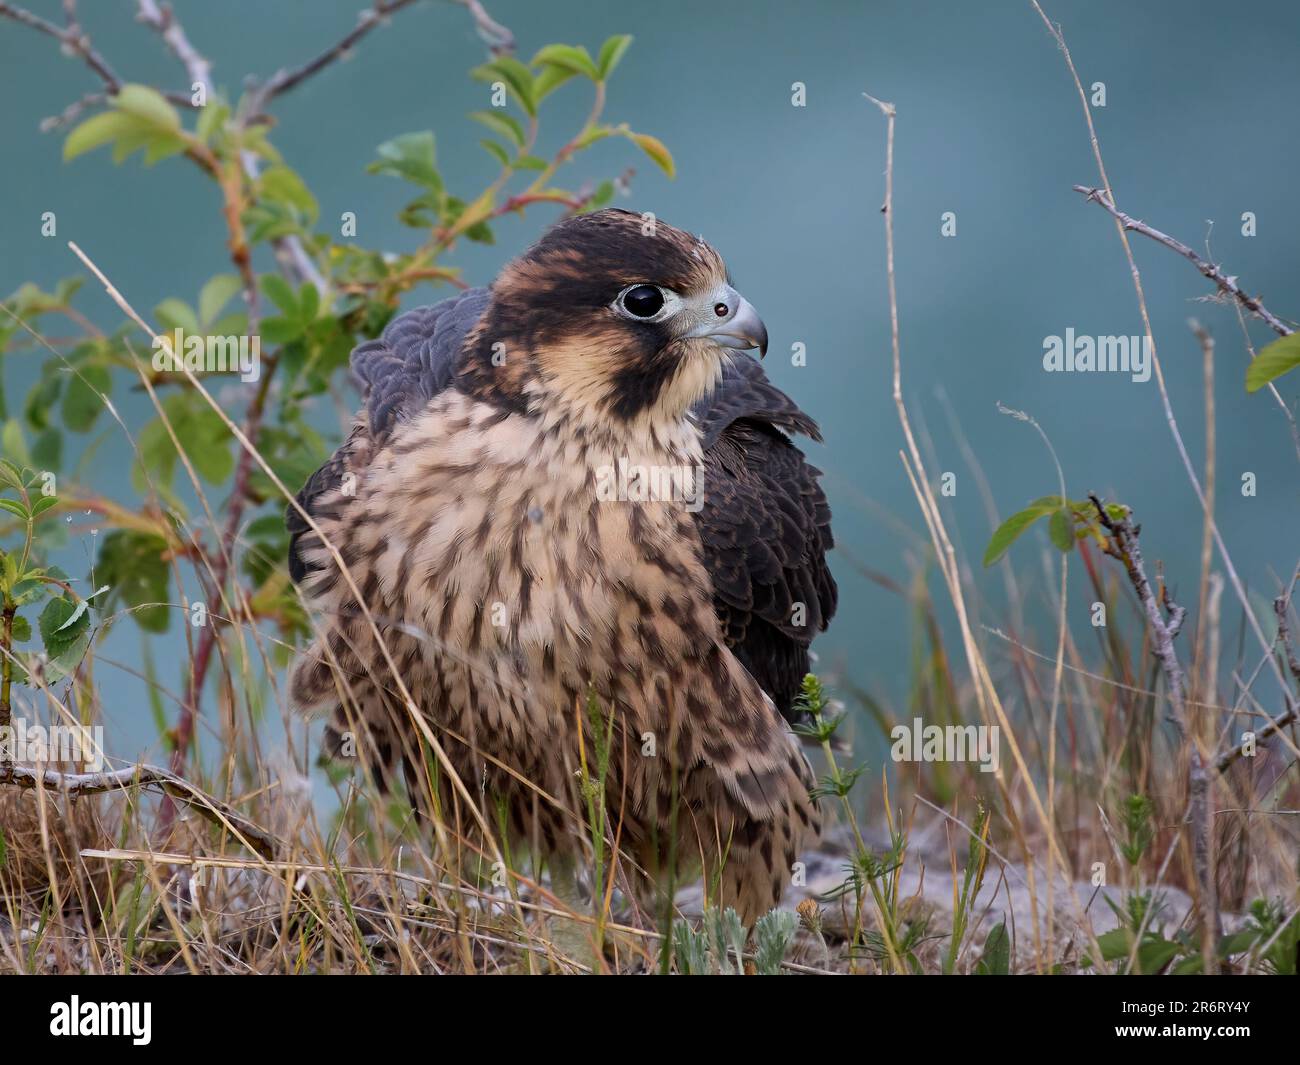 Juvenile Peregrine falcon (Falco peregrinus) in its natural environment Stock Photo